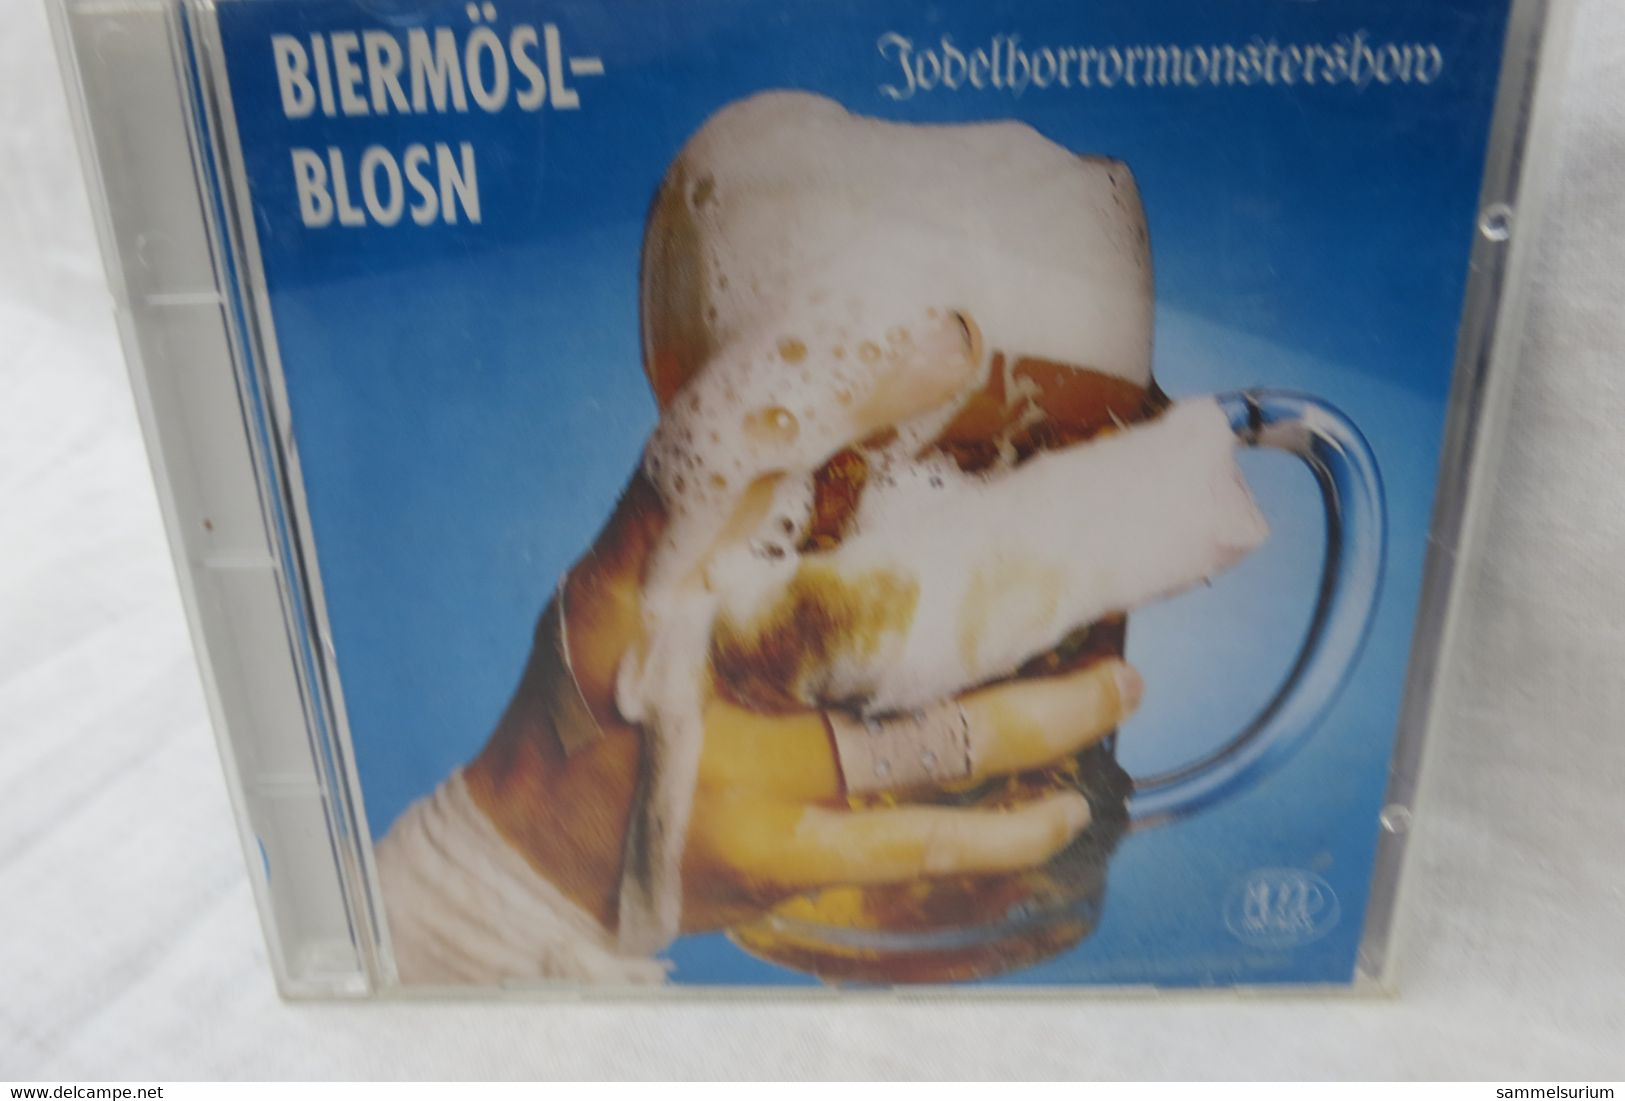 CD "Biermösl Blosn" Jodelhorrormonstershow - Humour, Cabaret